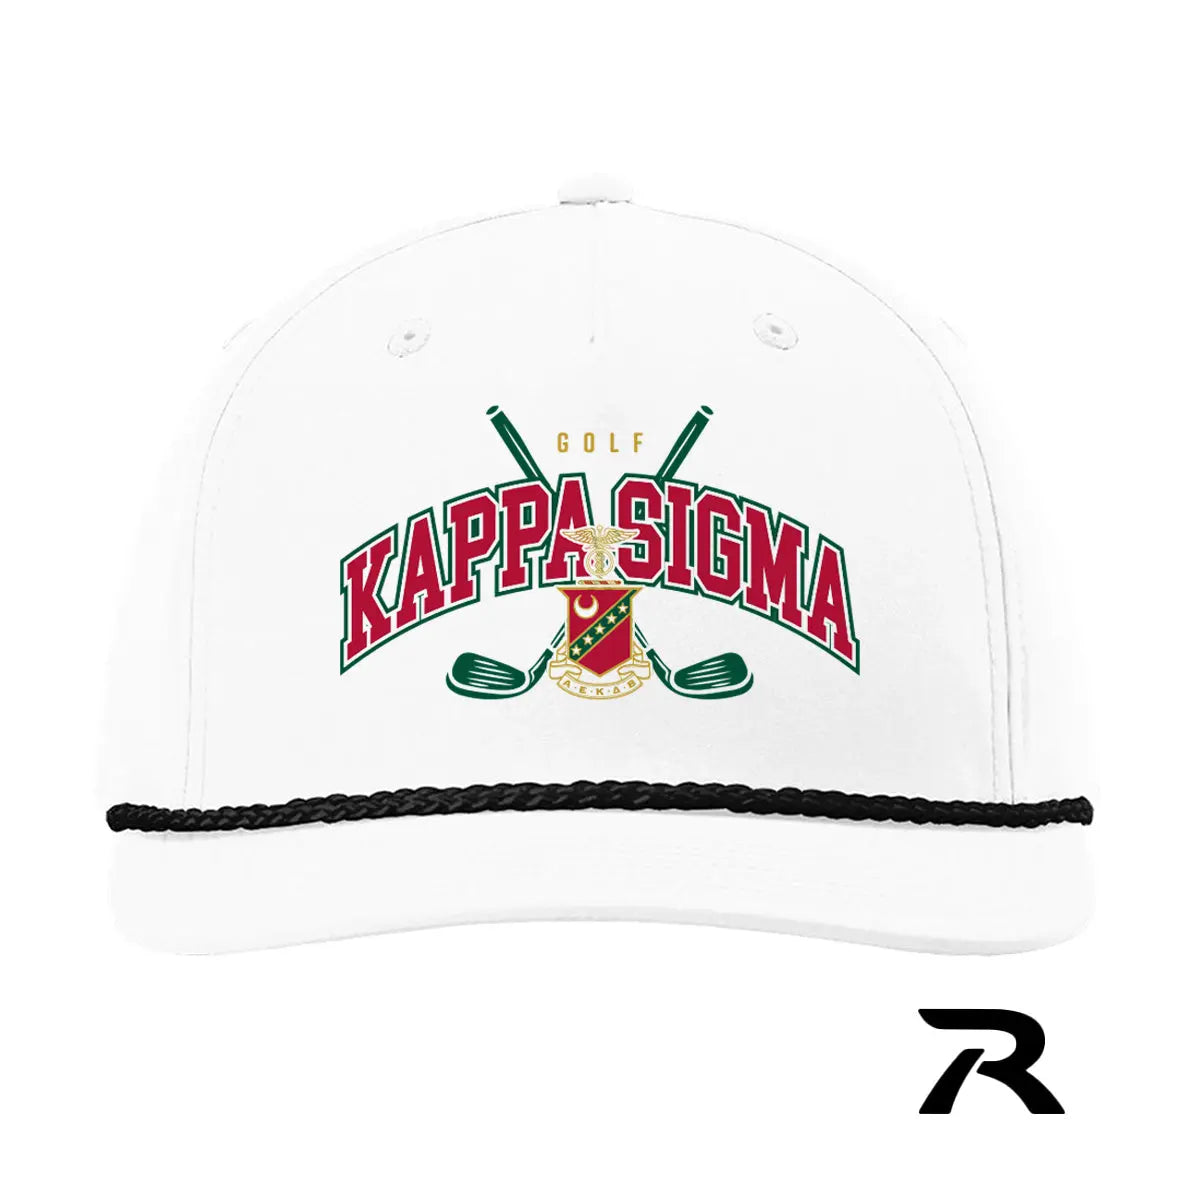 New! Kappa Sig Richardson Caddy Life Rope Hat - Kappa Sigma Official Store